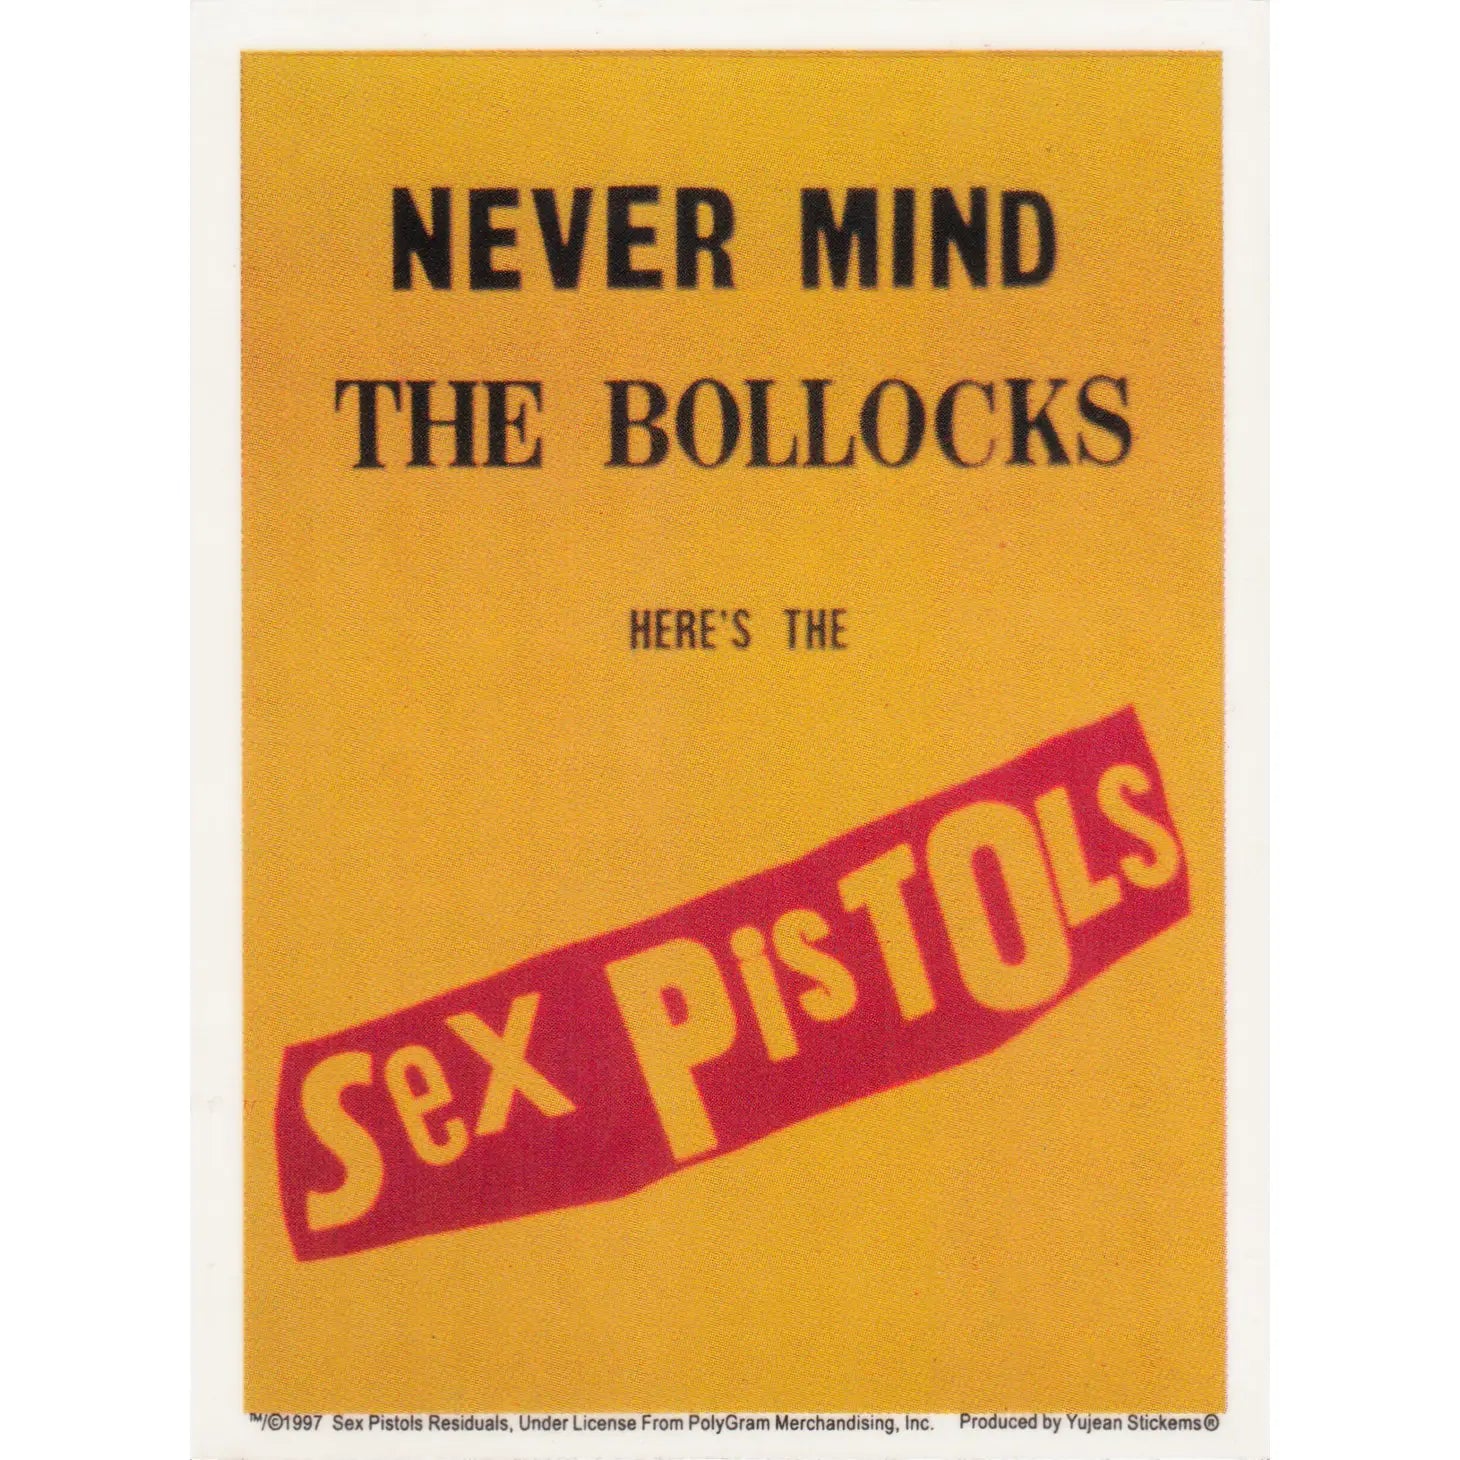 Vinyl transparent sticker of Sex Pistols’ “Never Mind the Bollocks Here’s the Sex Pistols”  album cover